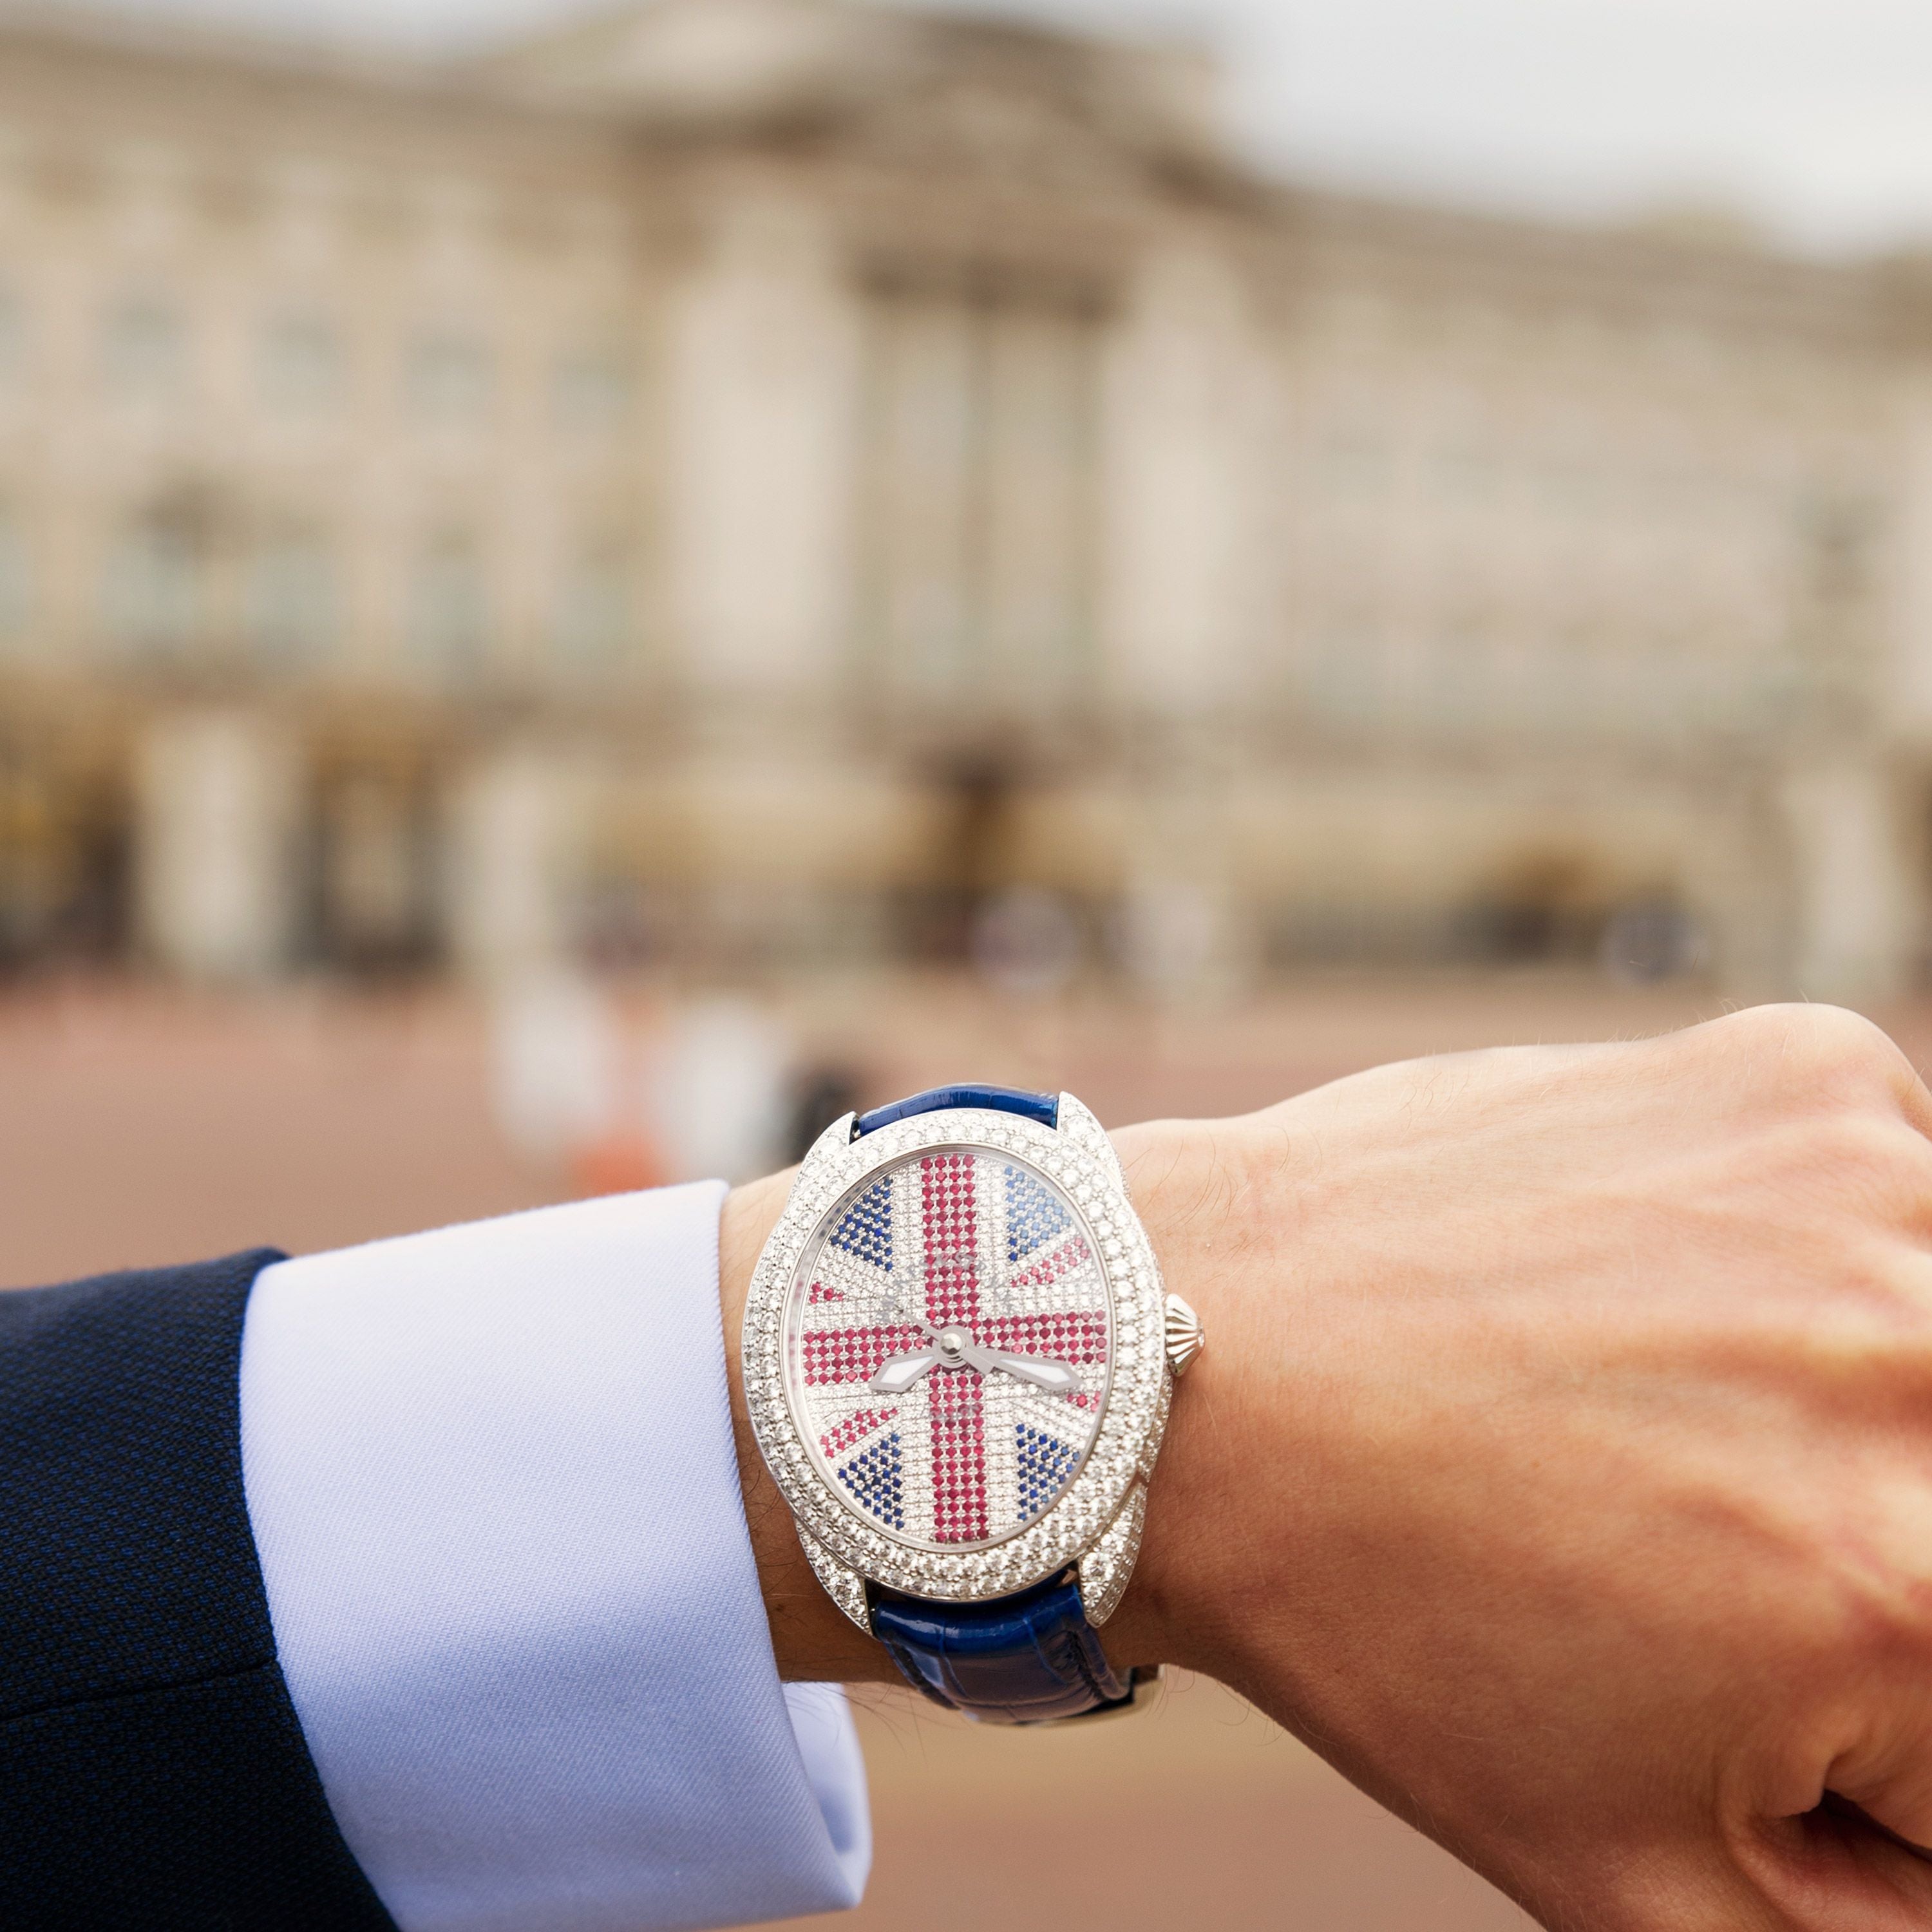 Regent Brexit 4047 Luxury Diamond Watch for Men - Stainless Steel - Backes & Strauss